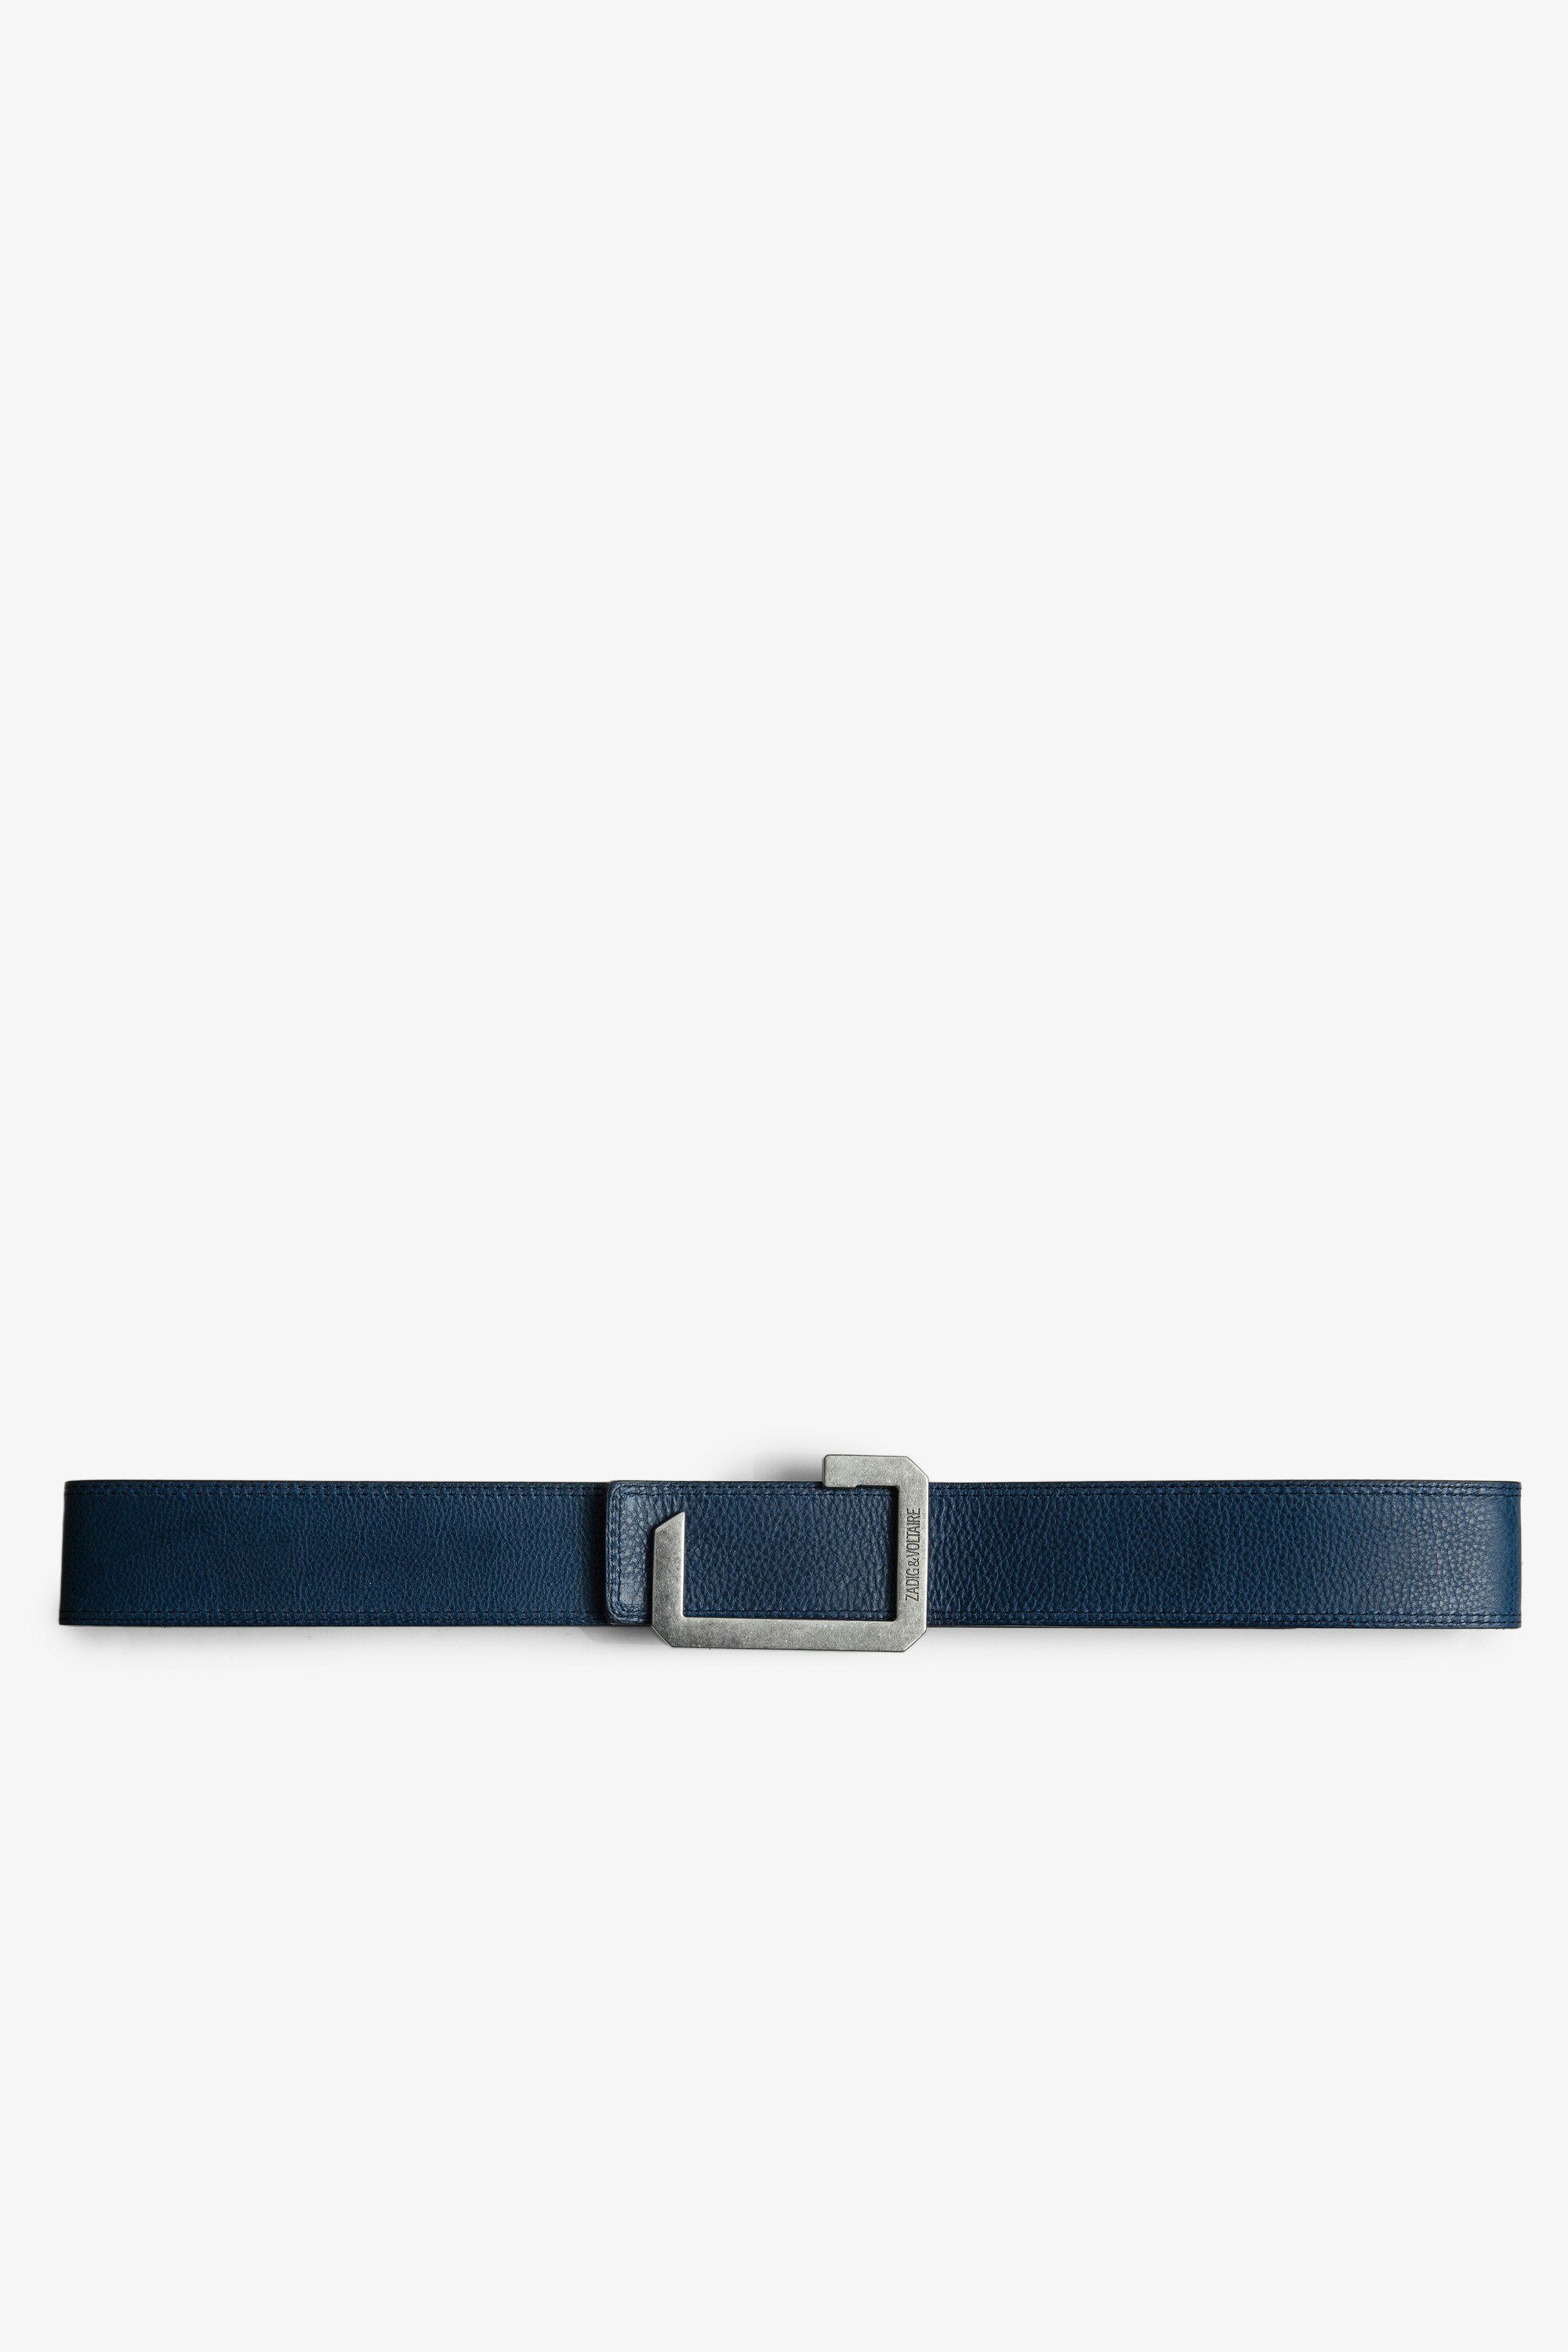 The Reversible Belt - Men's reversible leather belt.